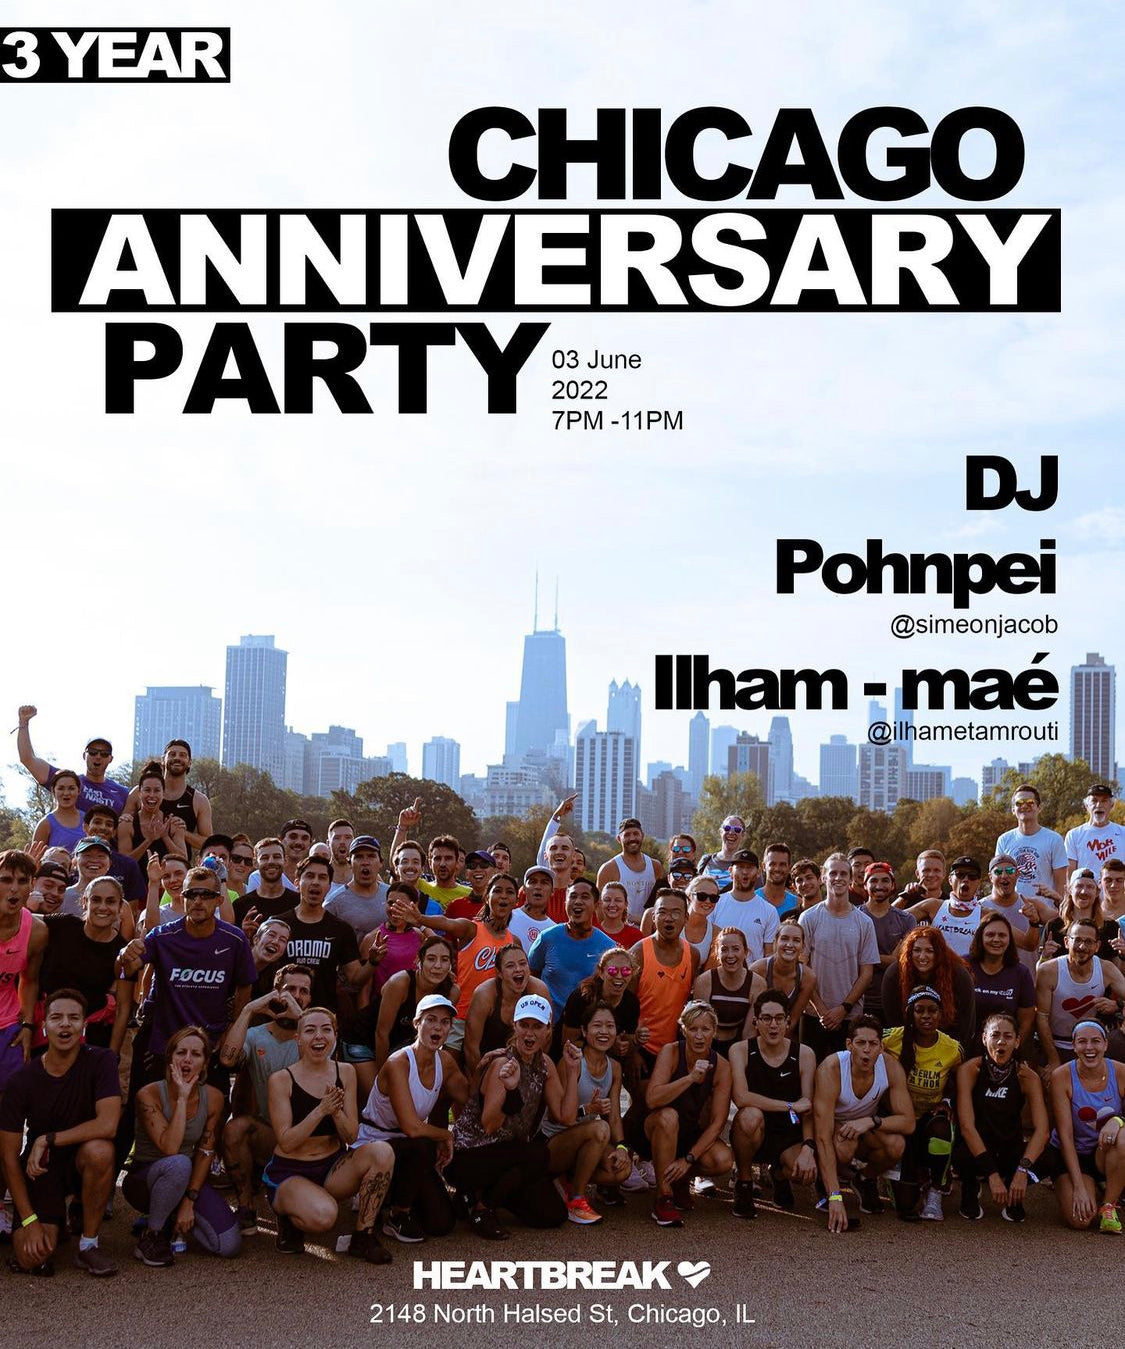 3 Year Heartbreak Chicago Anniversary Party